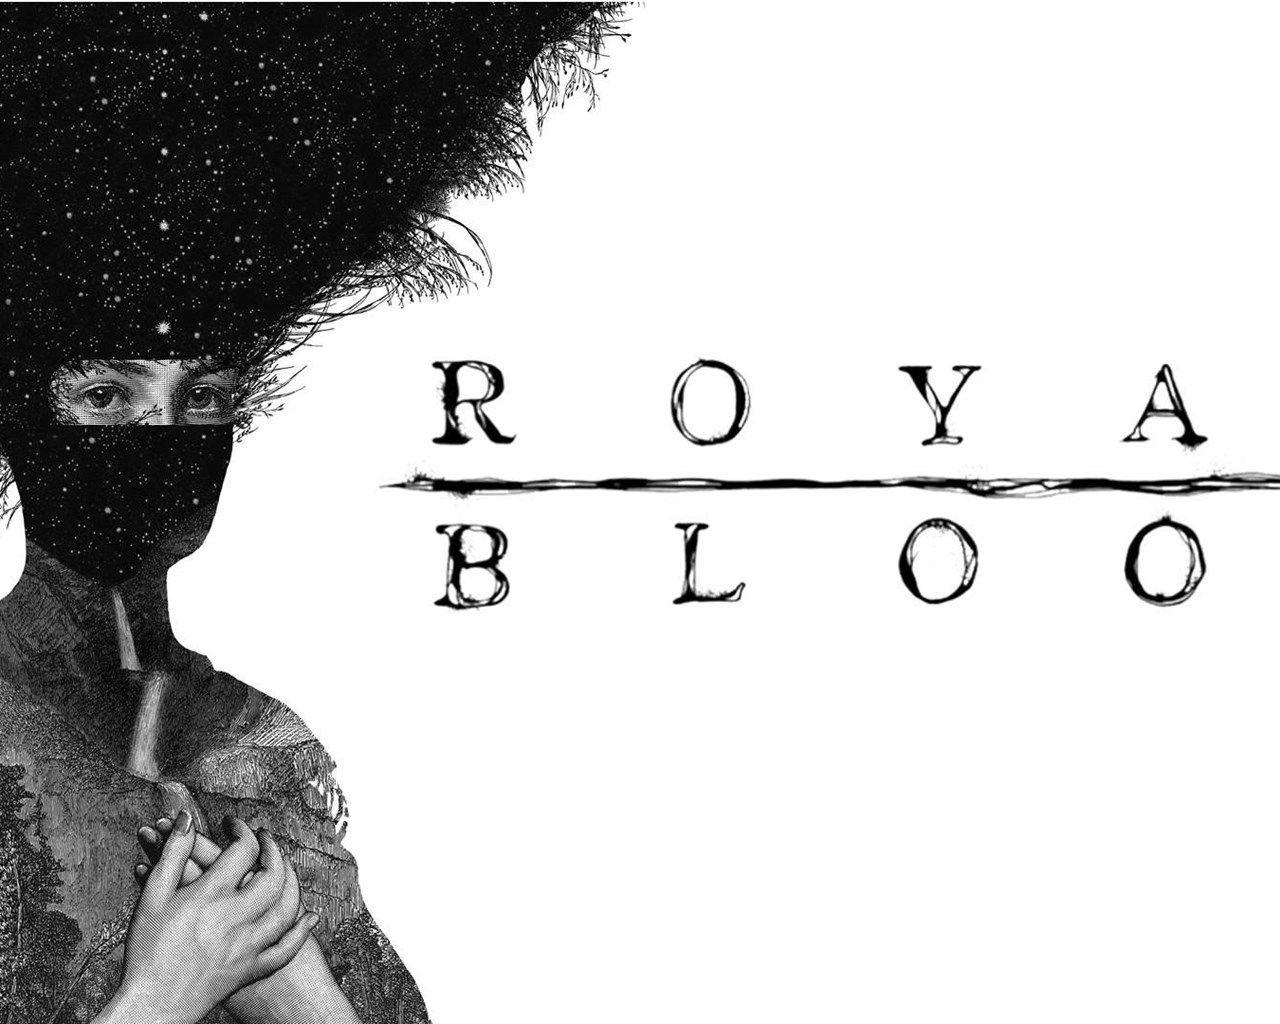 royal blood full album playlist